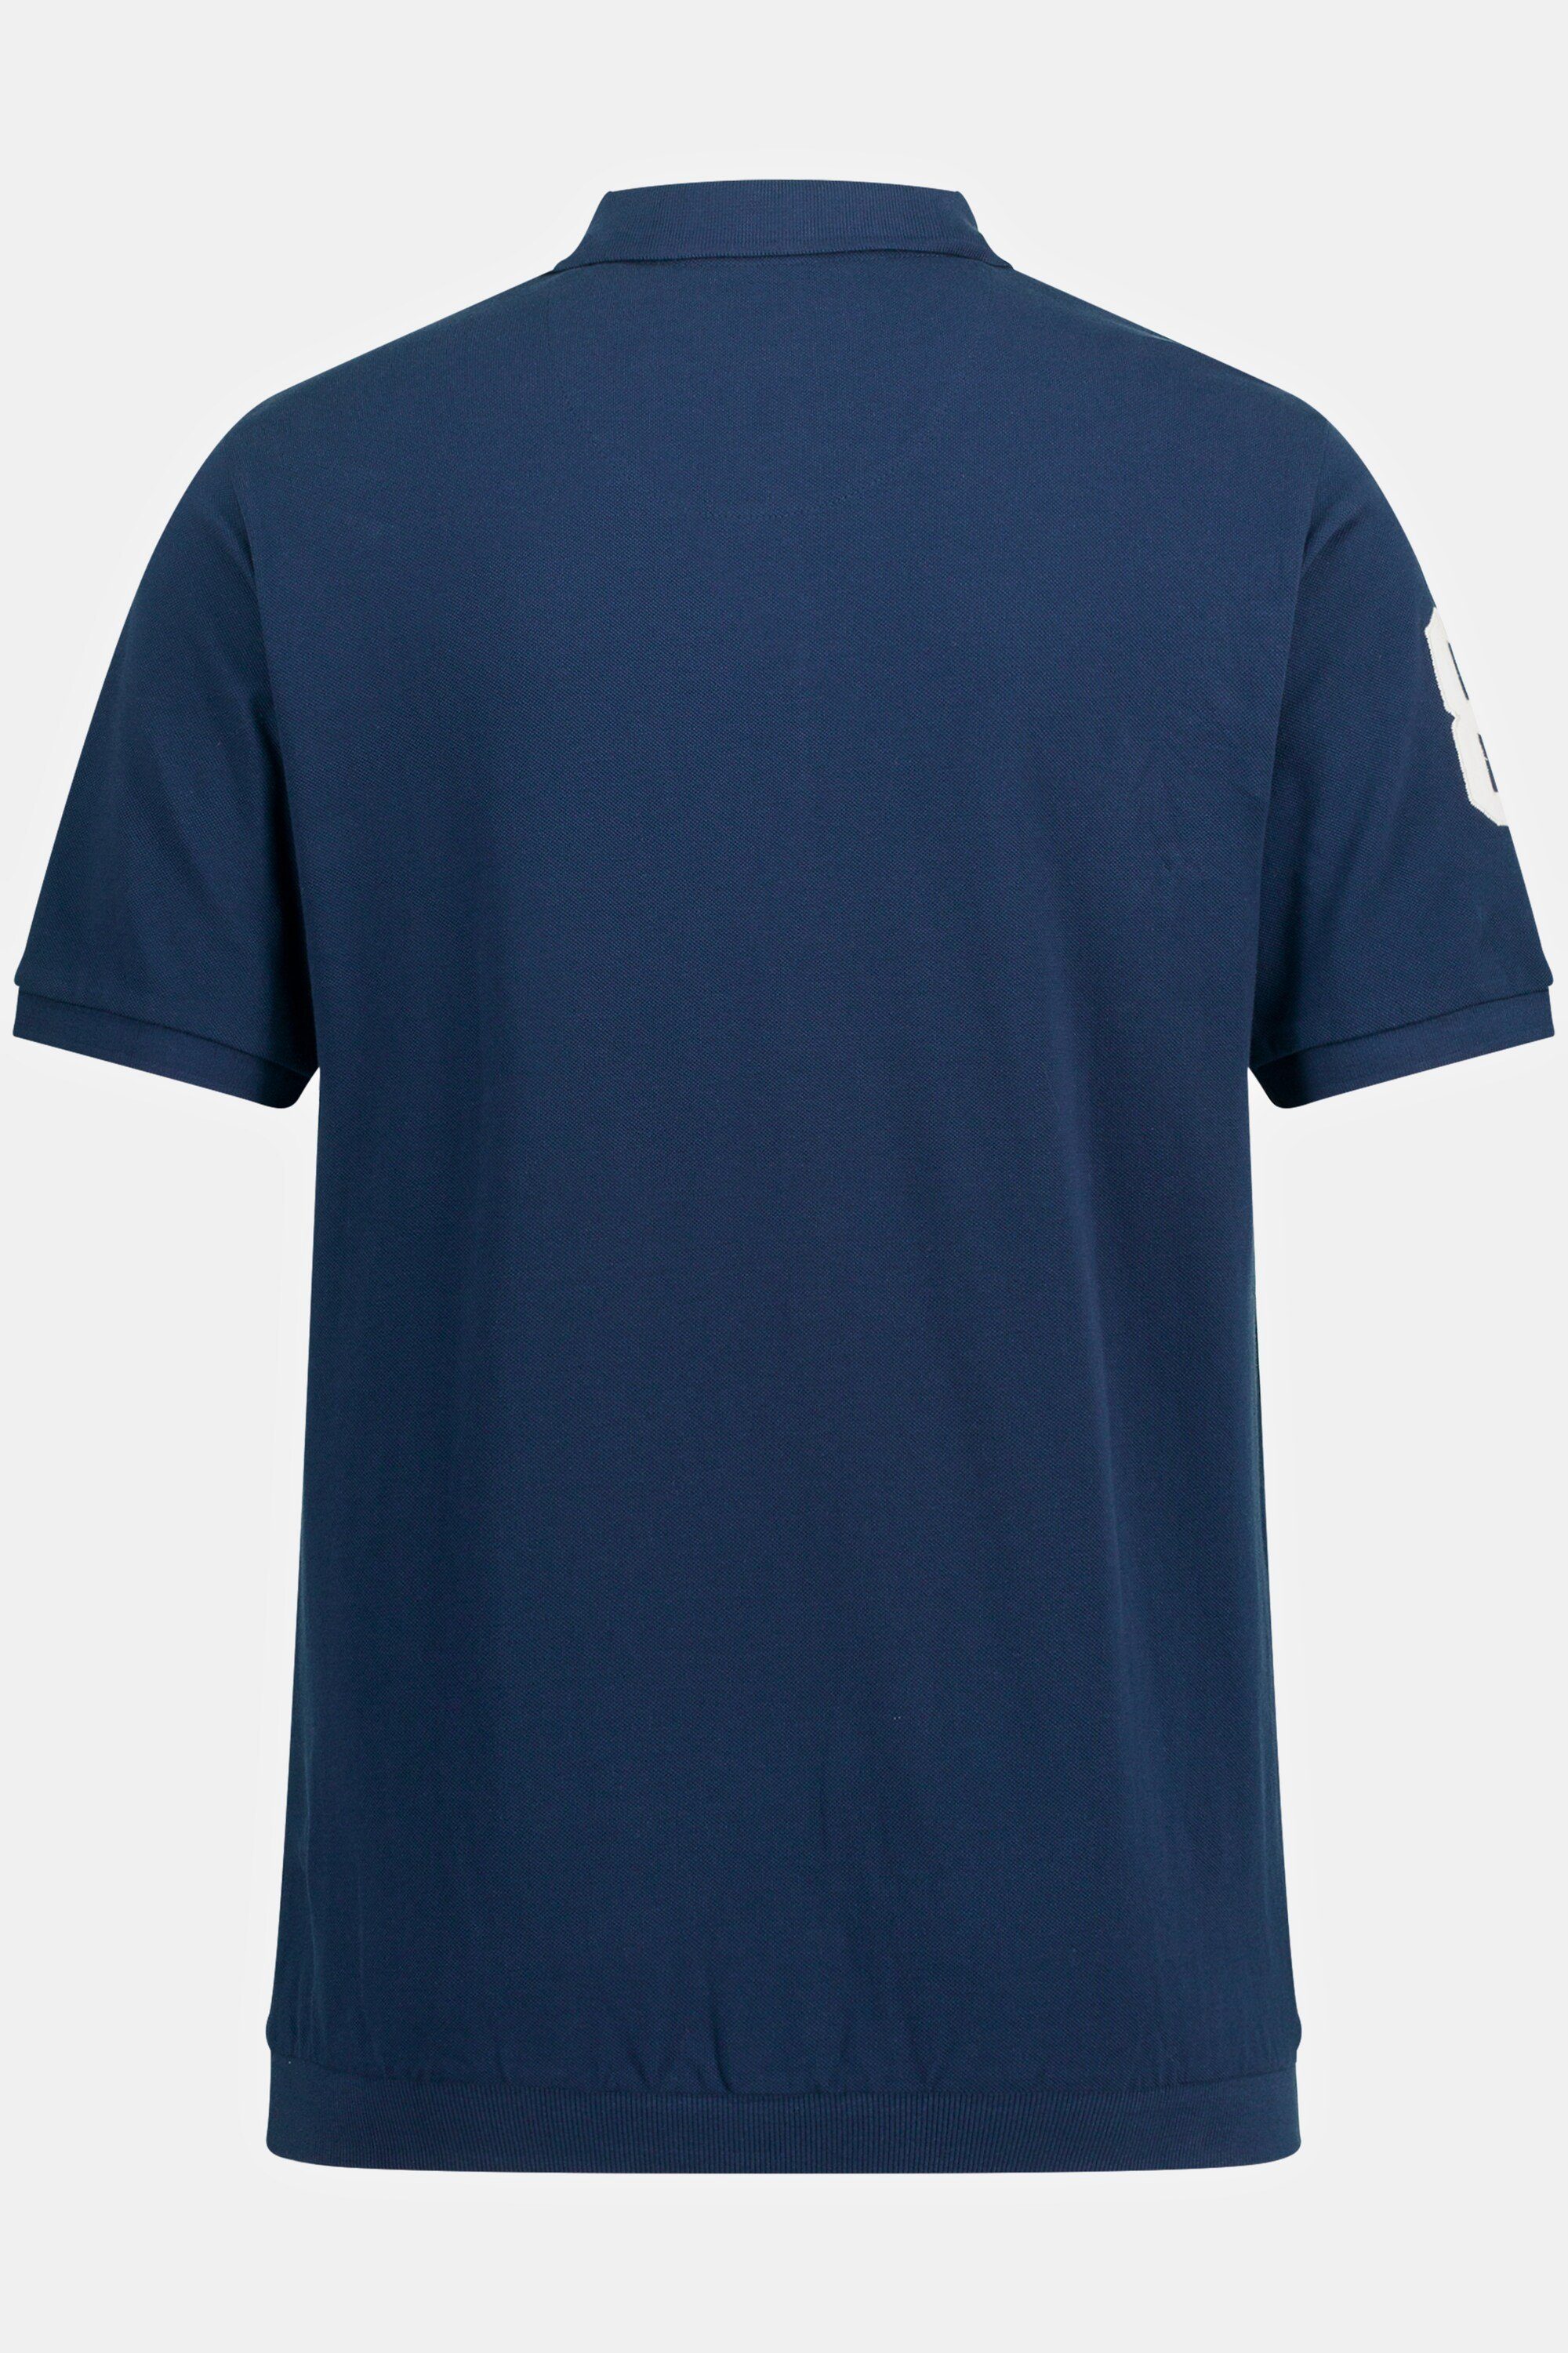 bis nachtblau Bauchfit XL Halbarm Poloshirt JP1880 mattes 8 Poloshirt